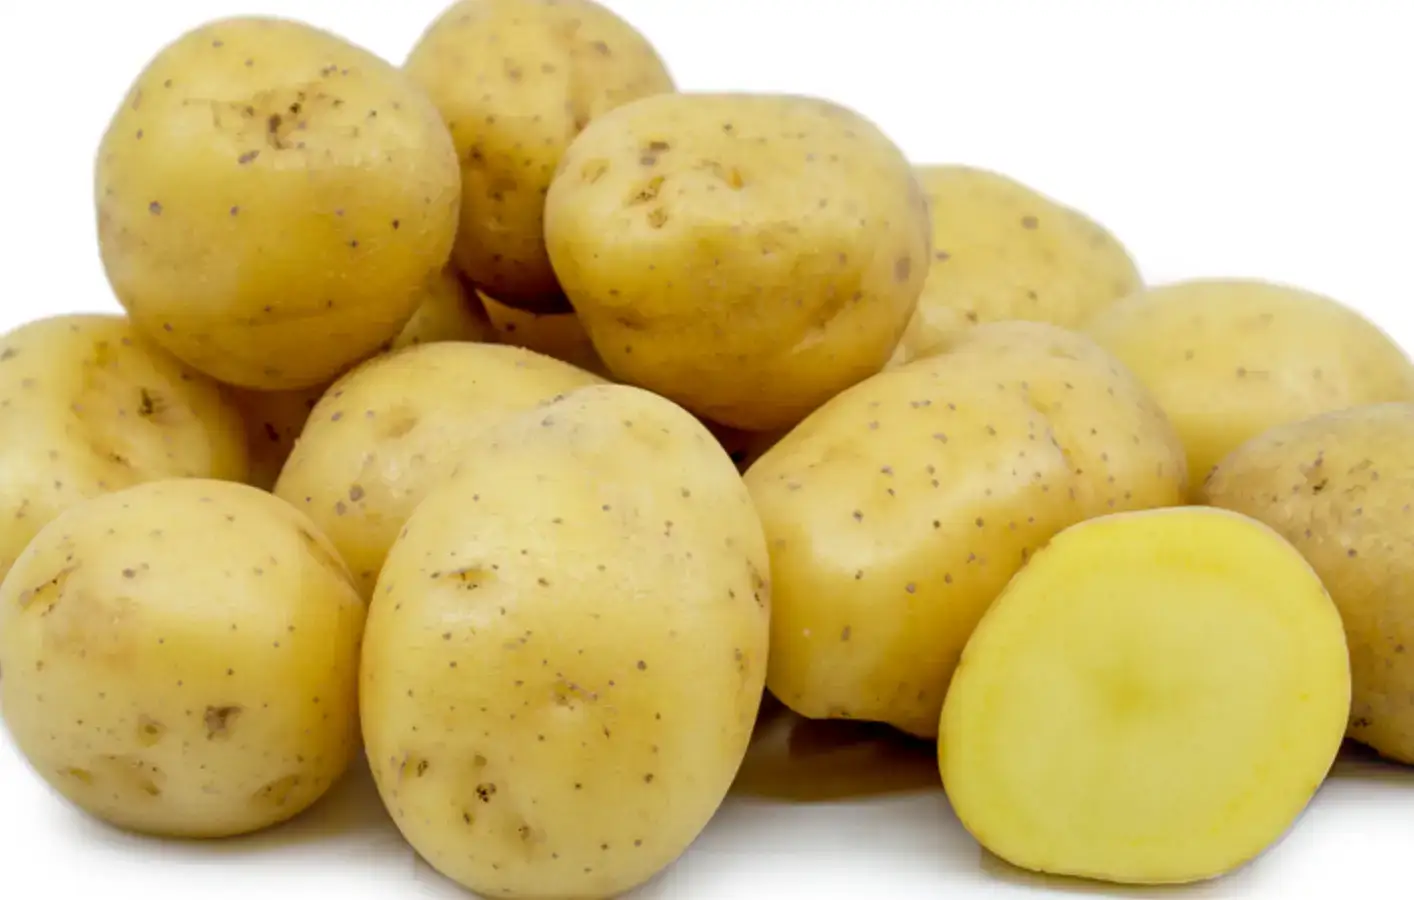 Potatoes picture. Сорт Адретта. Сорт картофеля Адретта. Бронницкий сорт картофеля. Картофель желтый сорта Адретта.